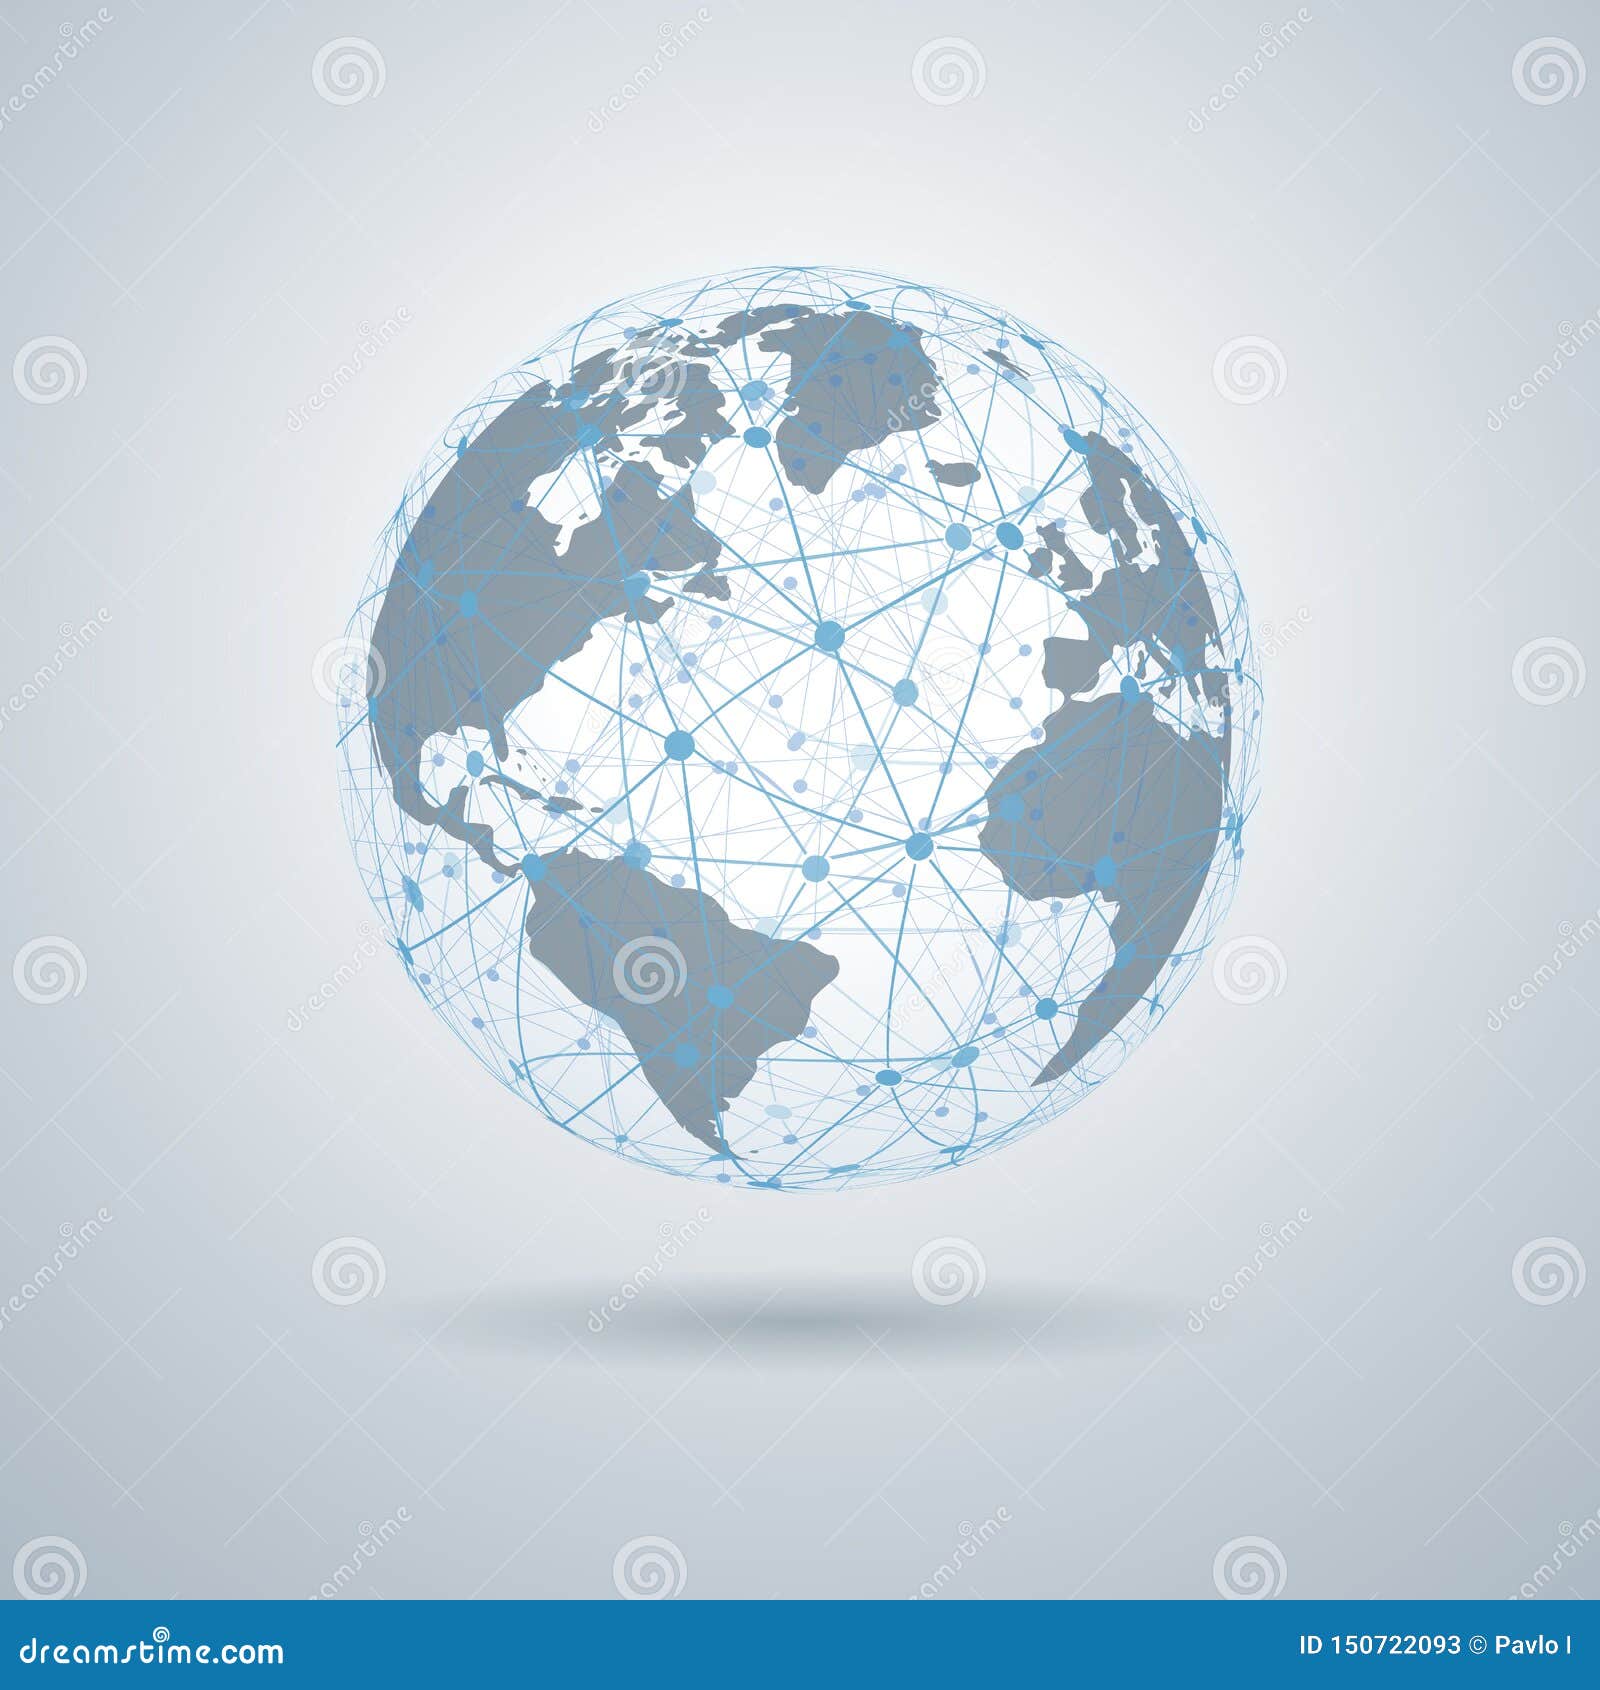 global tech concept, network connection, 3d globes with world maps Ã¢â¬â 